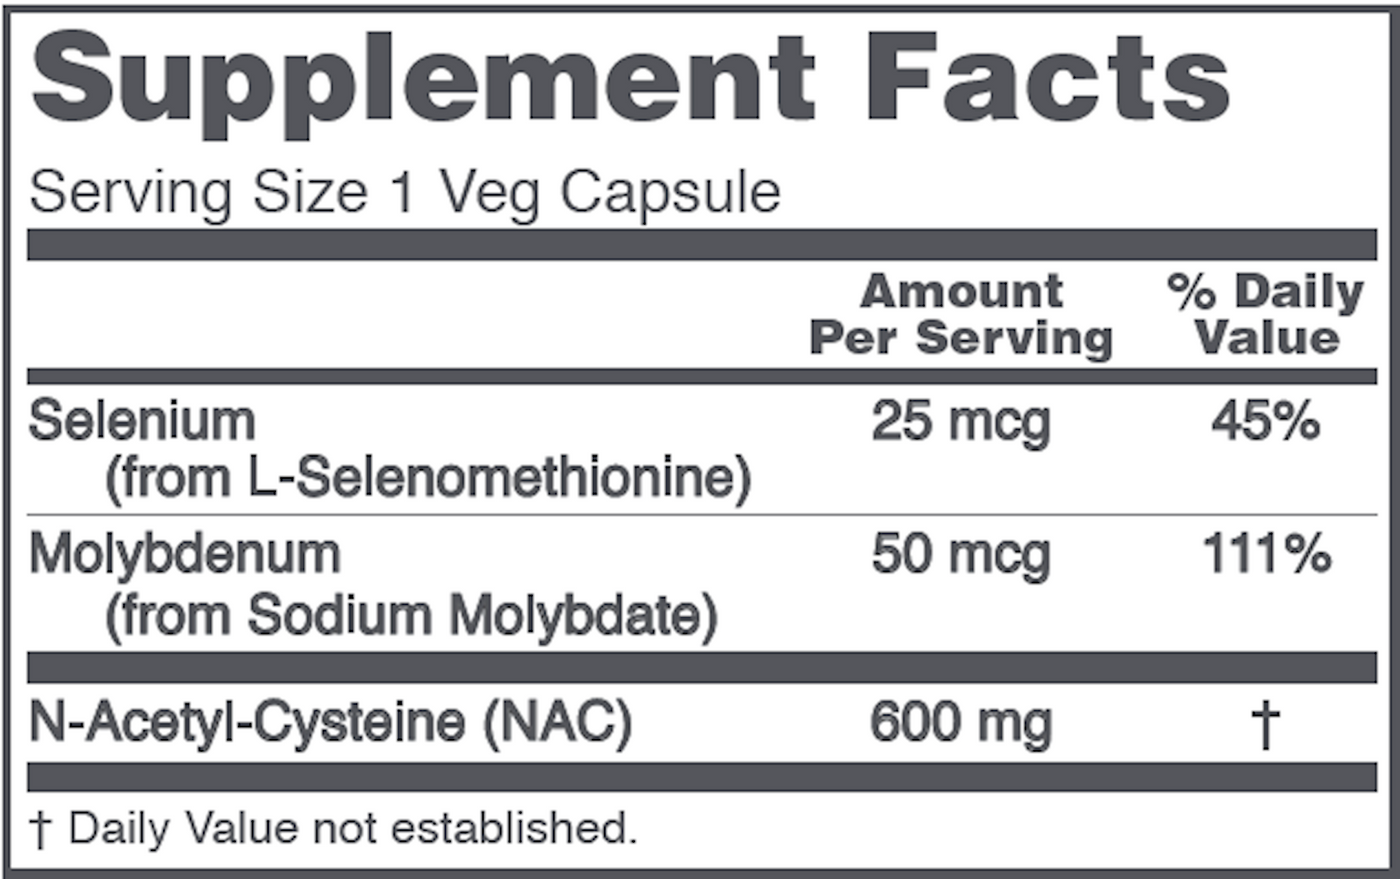 NAC 600 mg  Curated Wellness